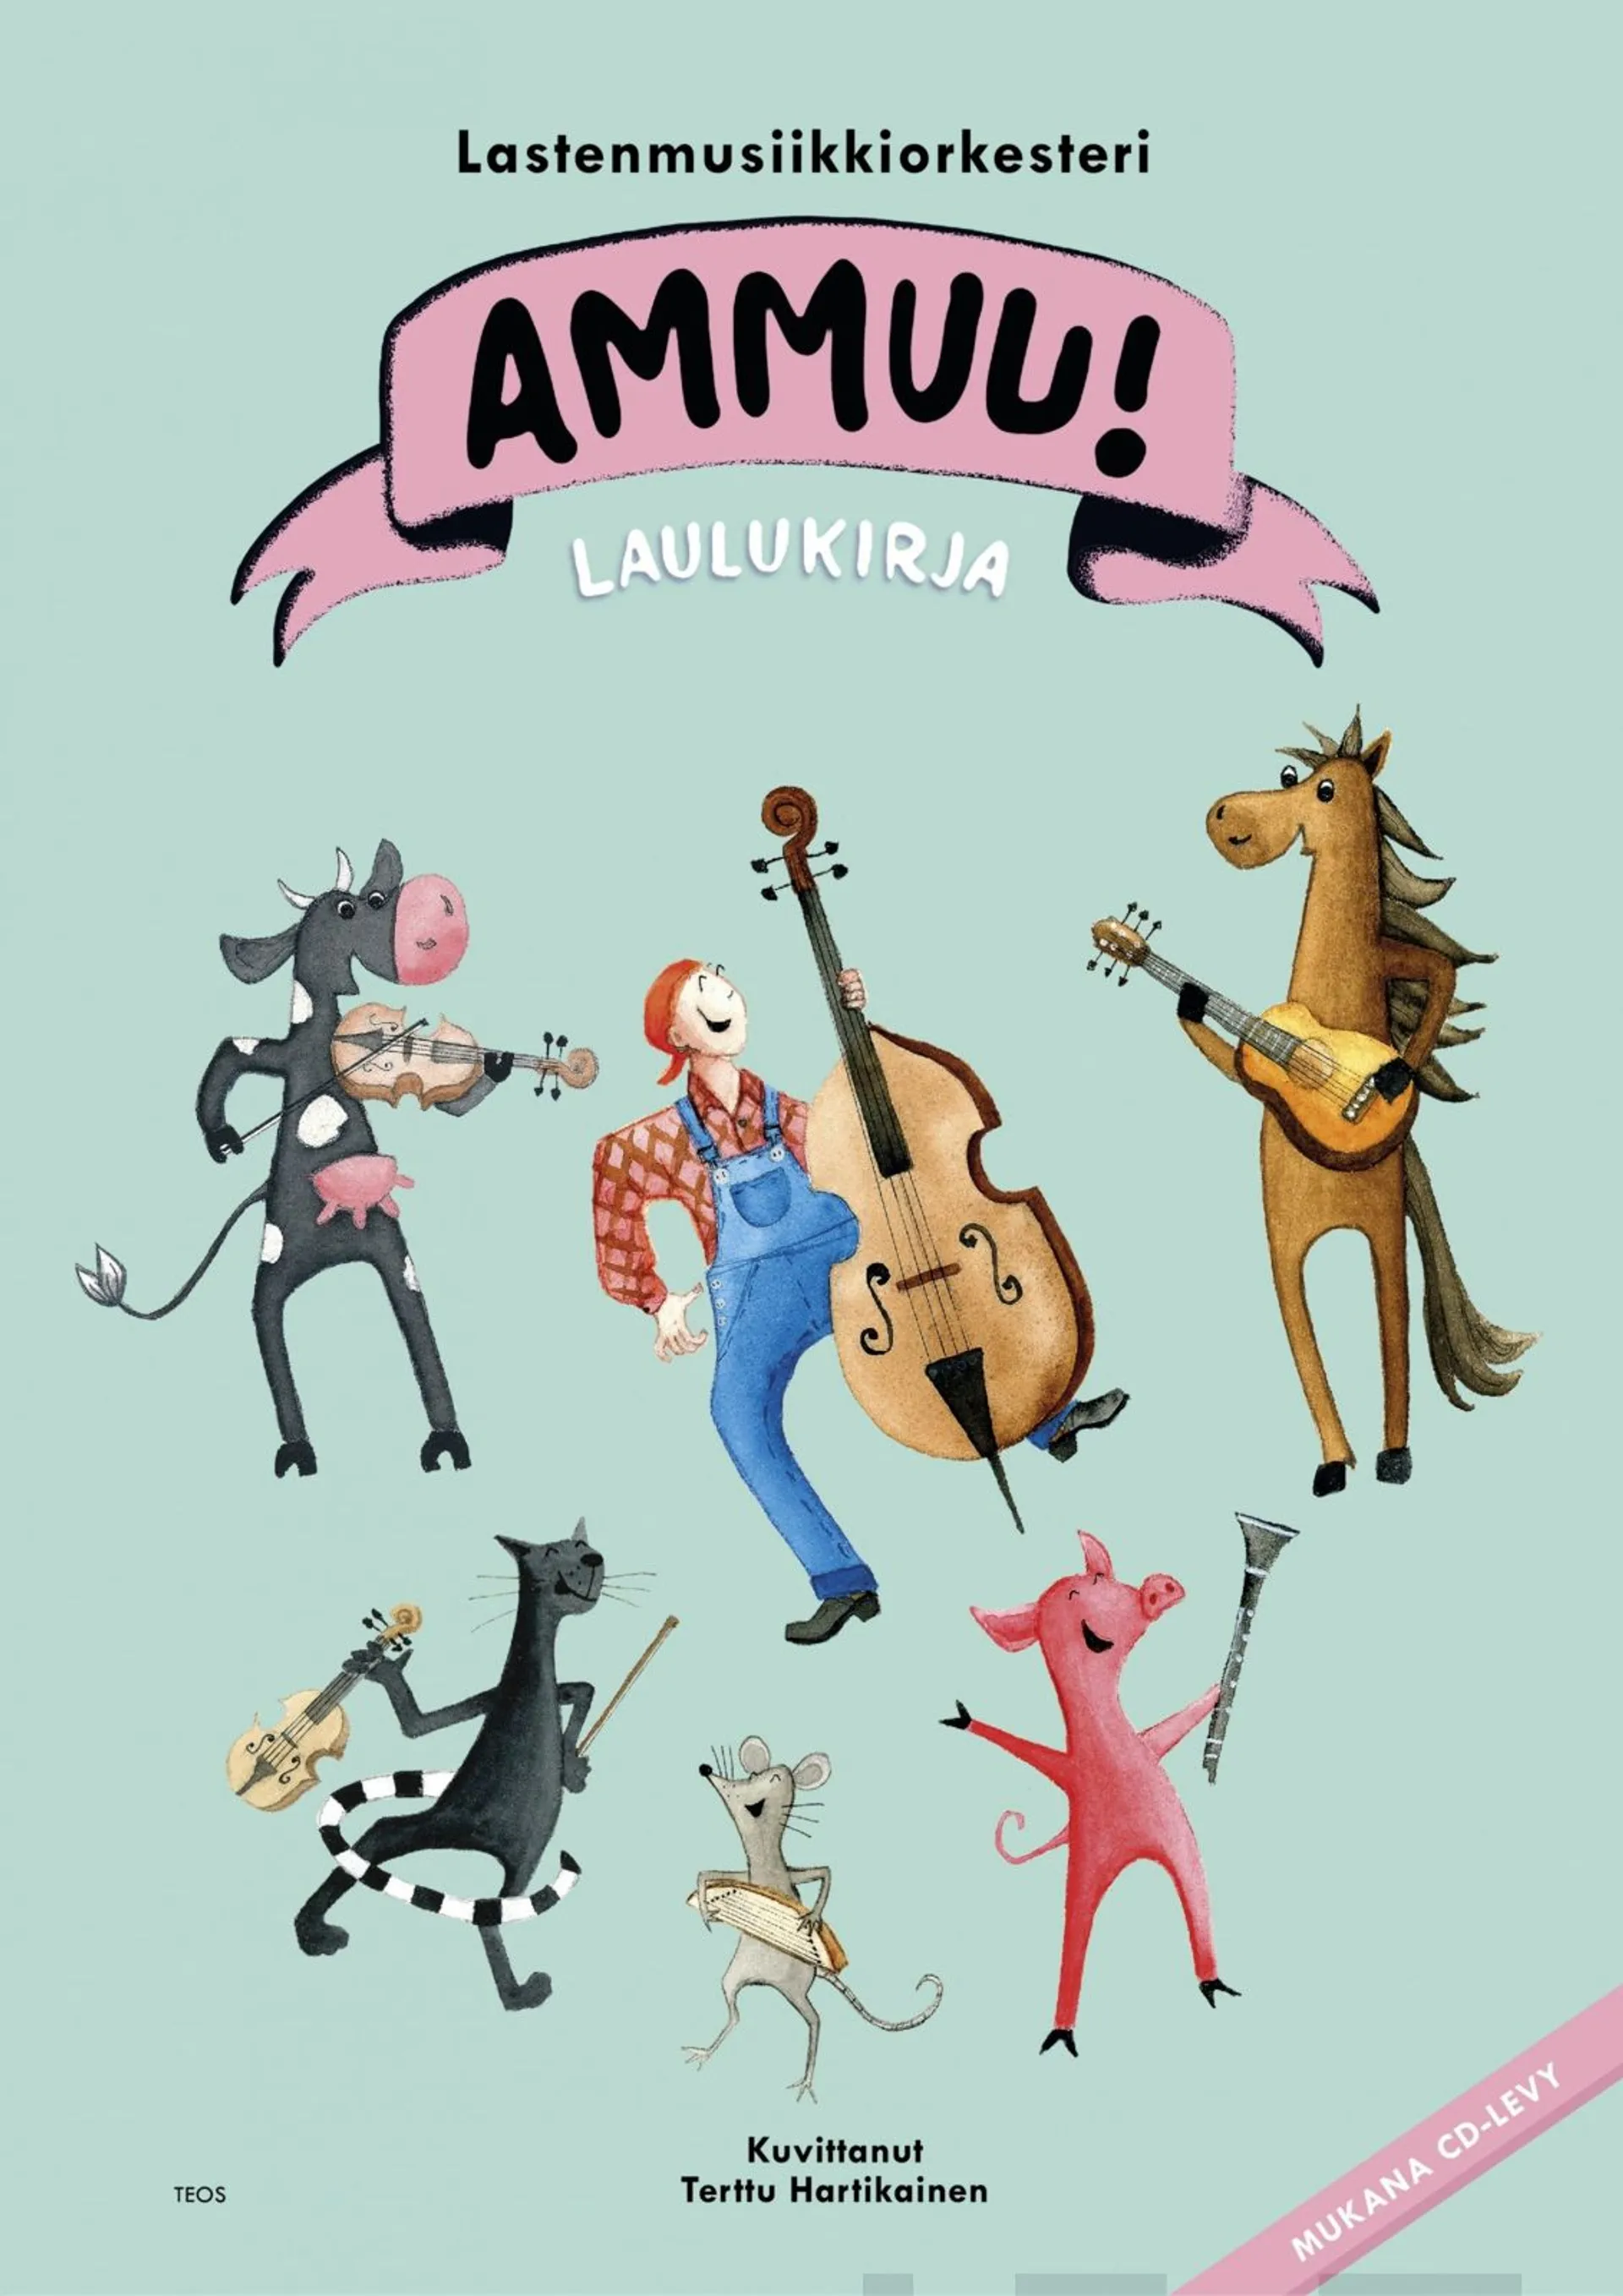 Lastenmusiikkiorkesteri Ammuu, Ammuu! Laulukirja  + CD